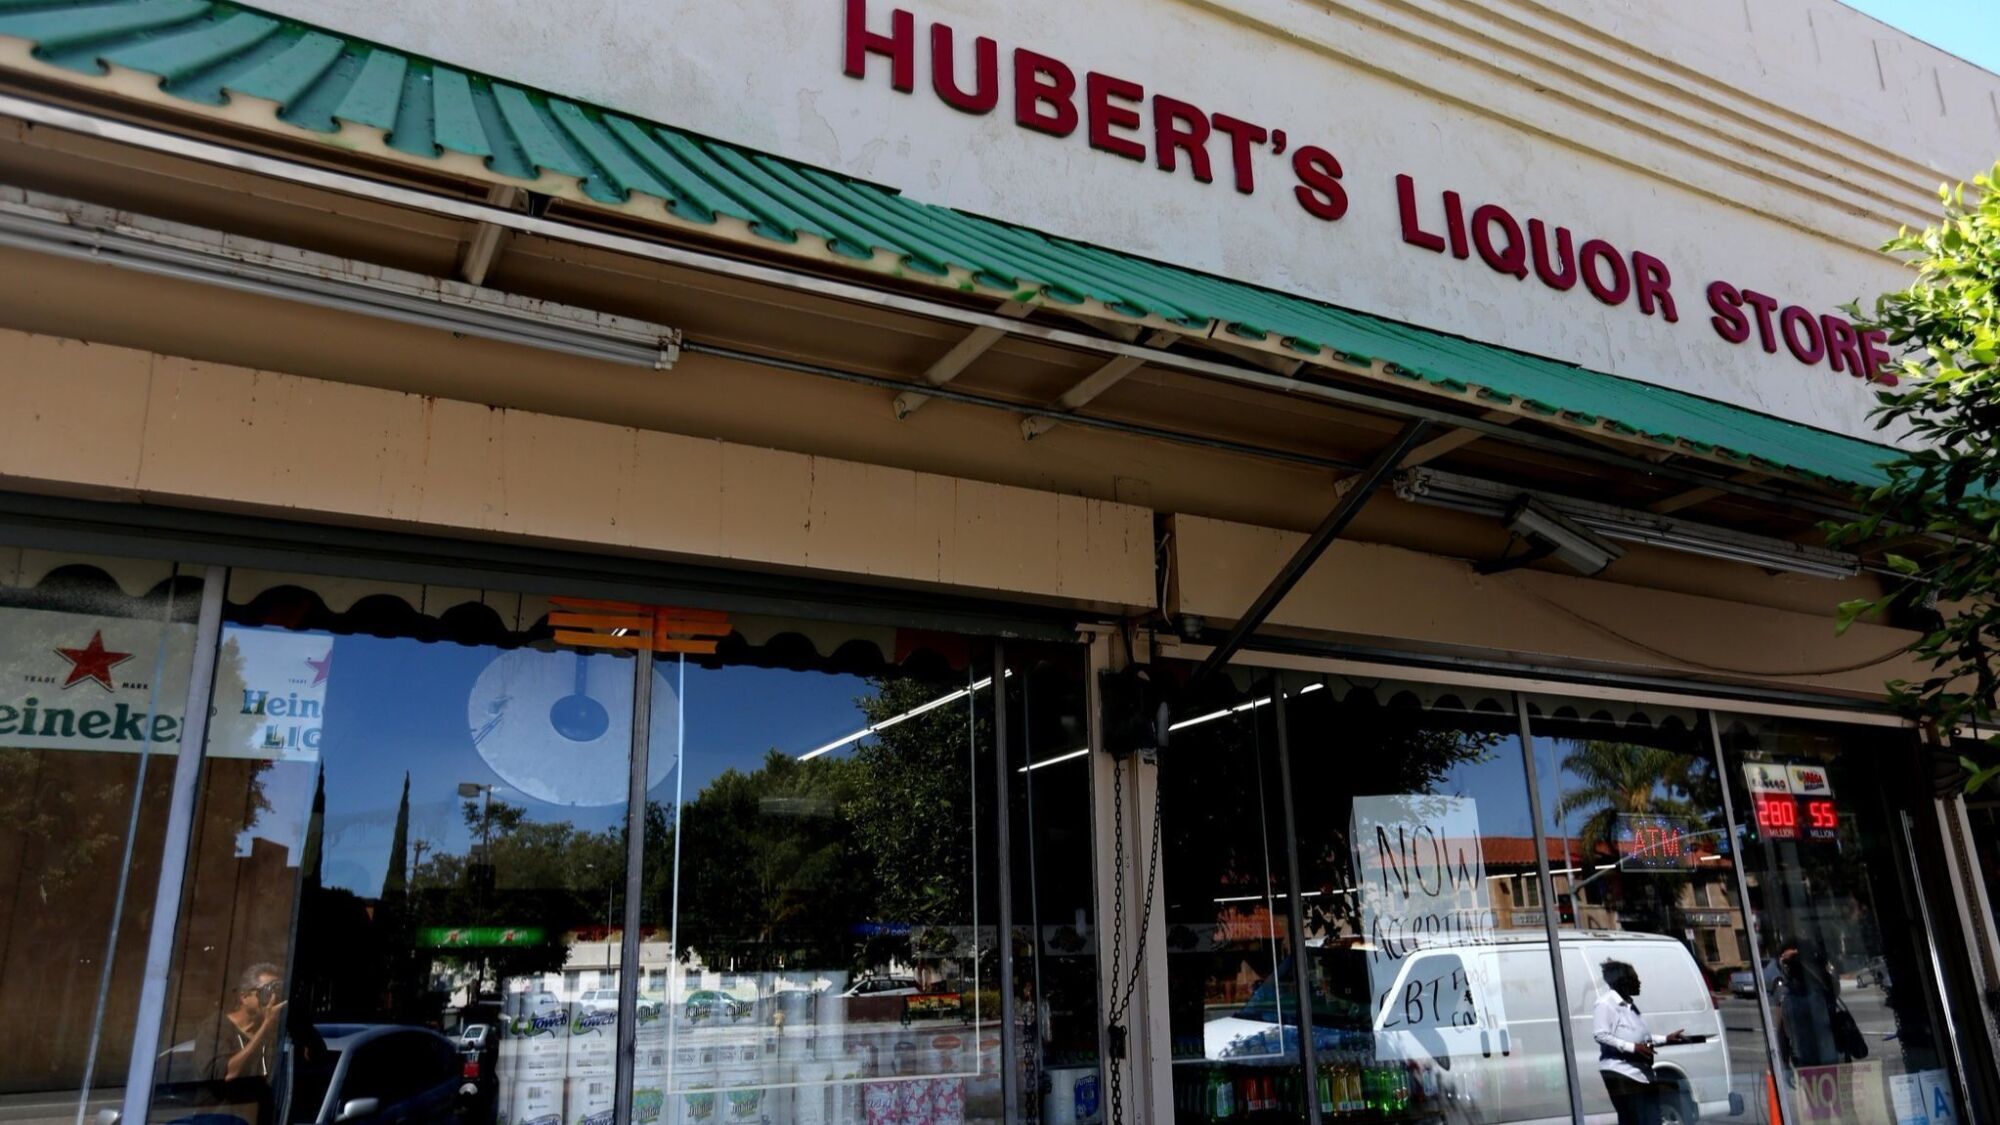 Hubert's Liquor